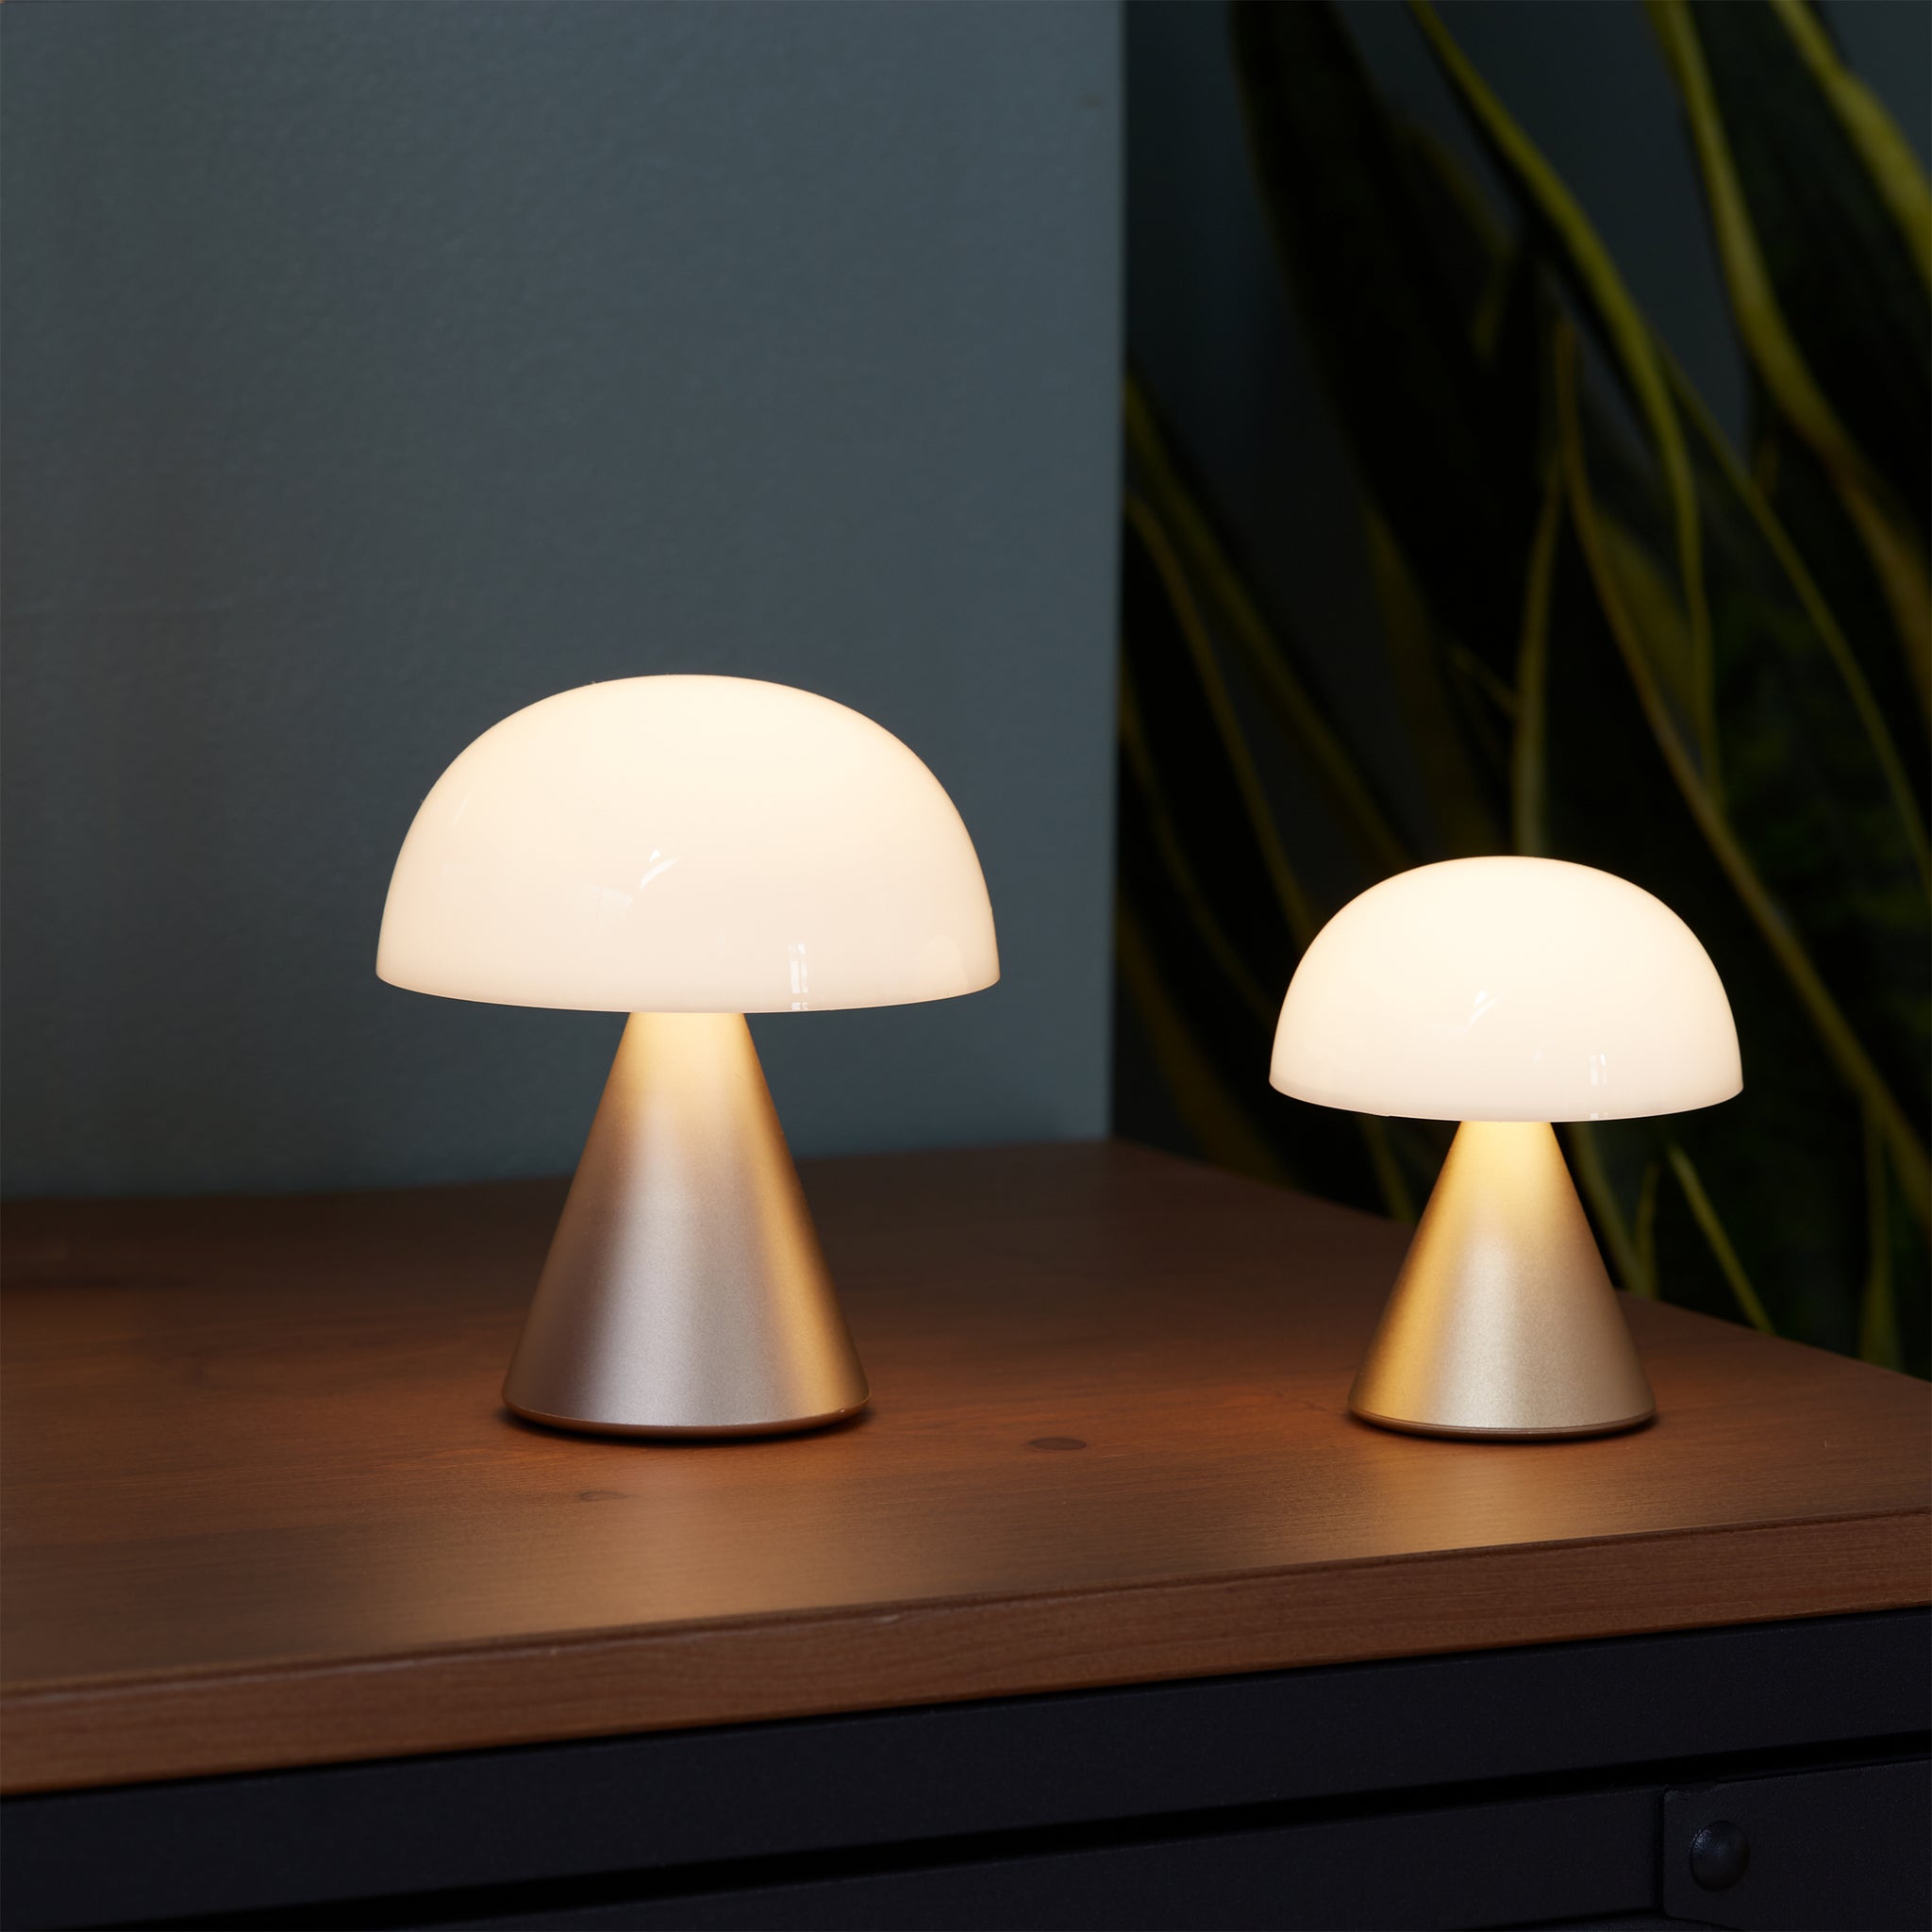 Lexon Mina Small Soft Gold│Oplaadbare LED lamp│art. LH60MD│naast Medium versie